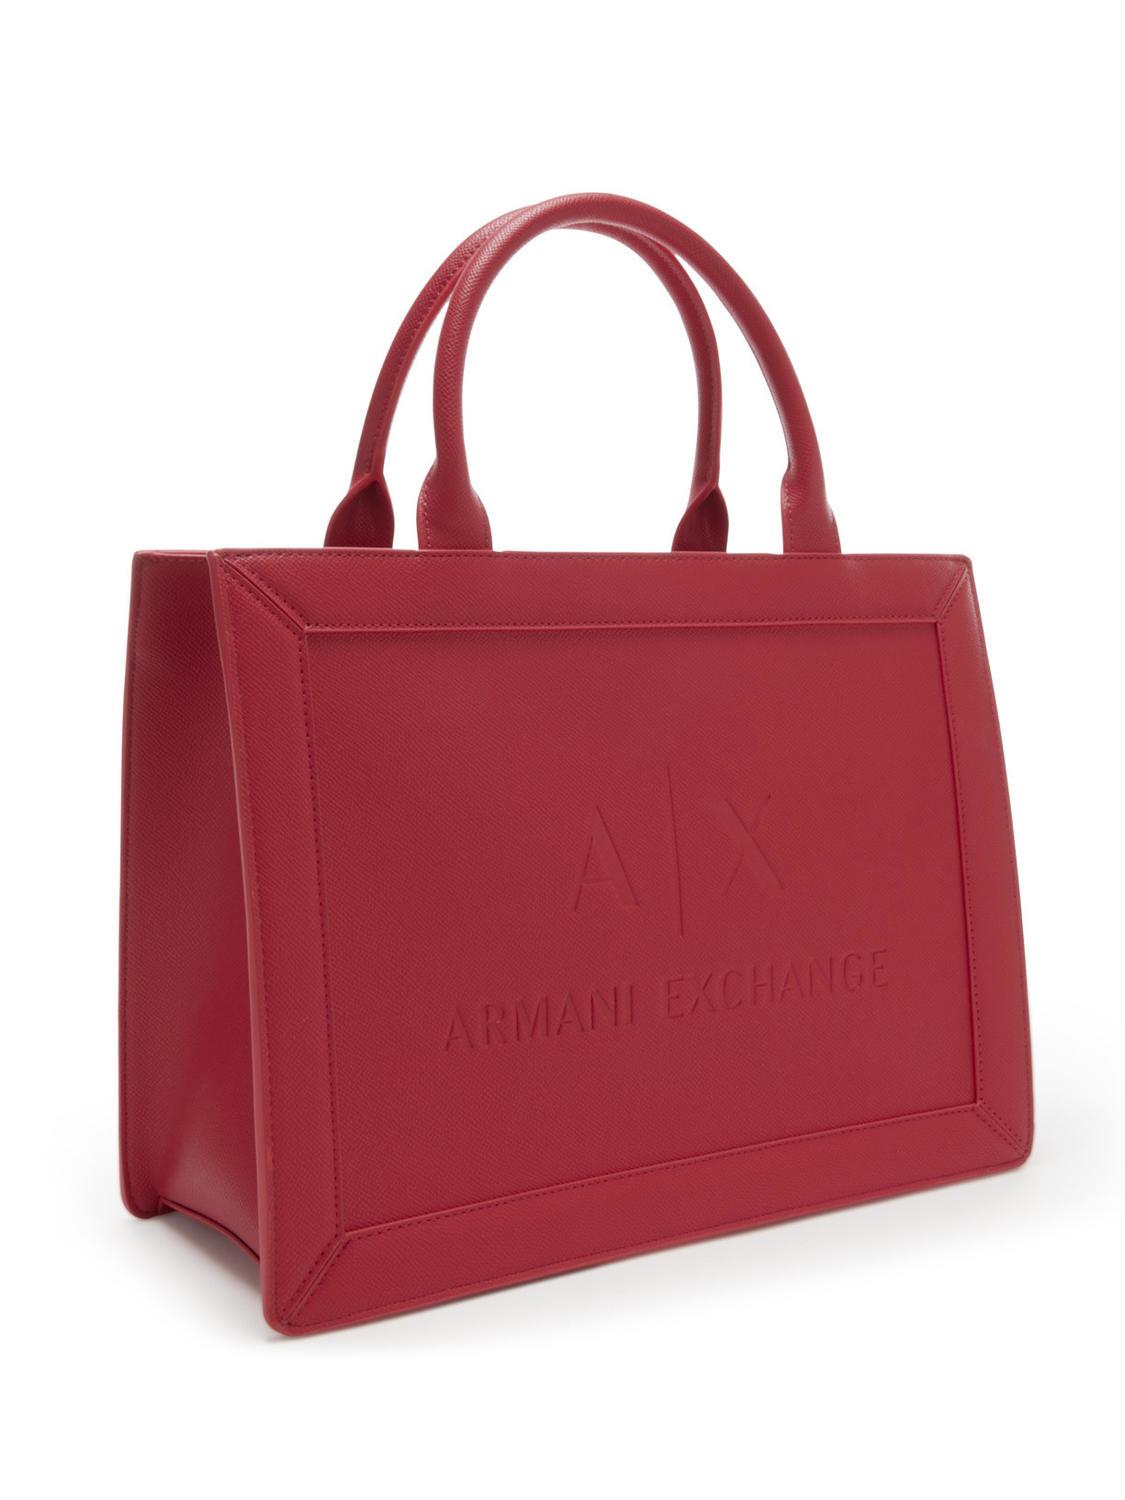 Armani Jeans - Red Woven Style Boston Bag | www.luxurybags.eu